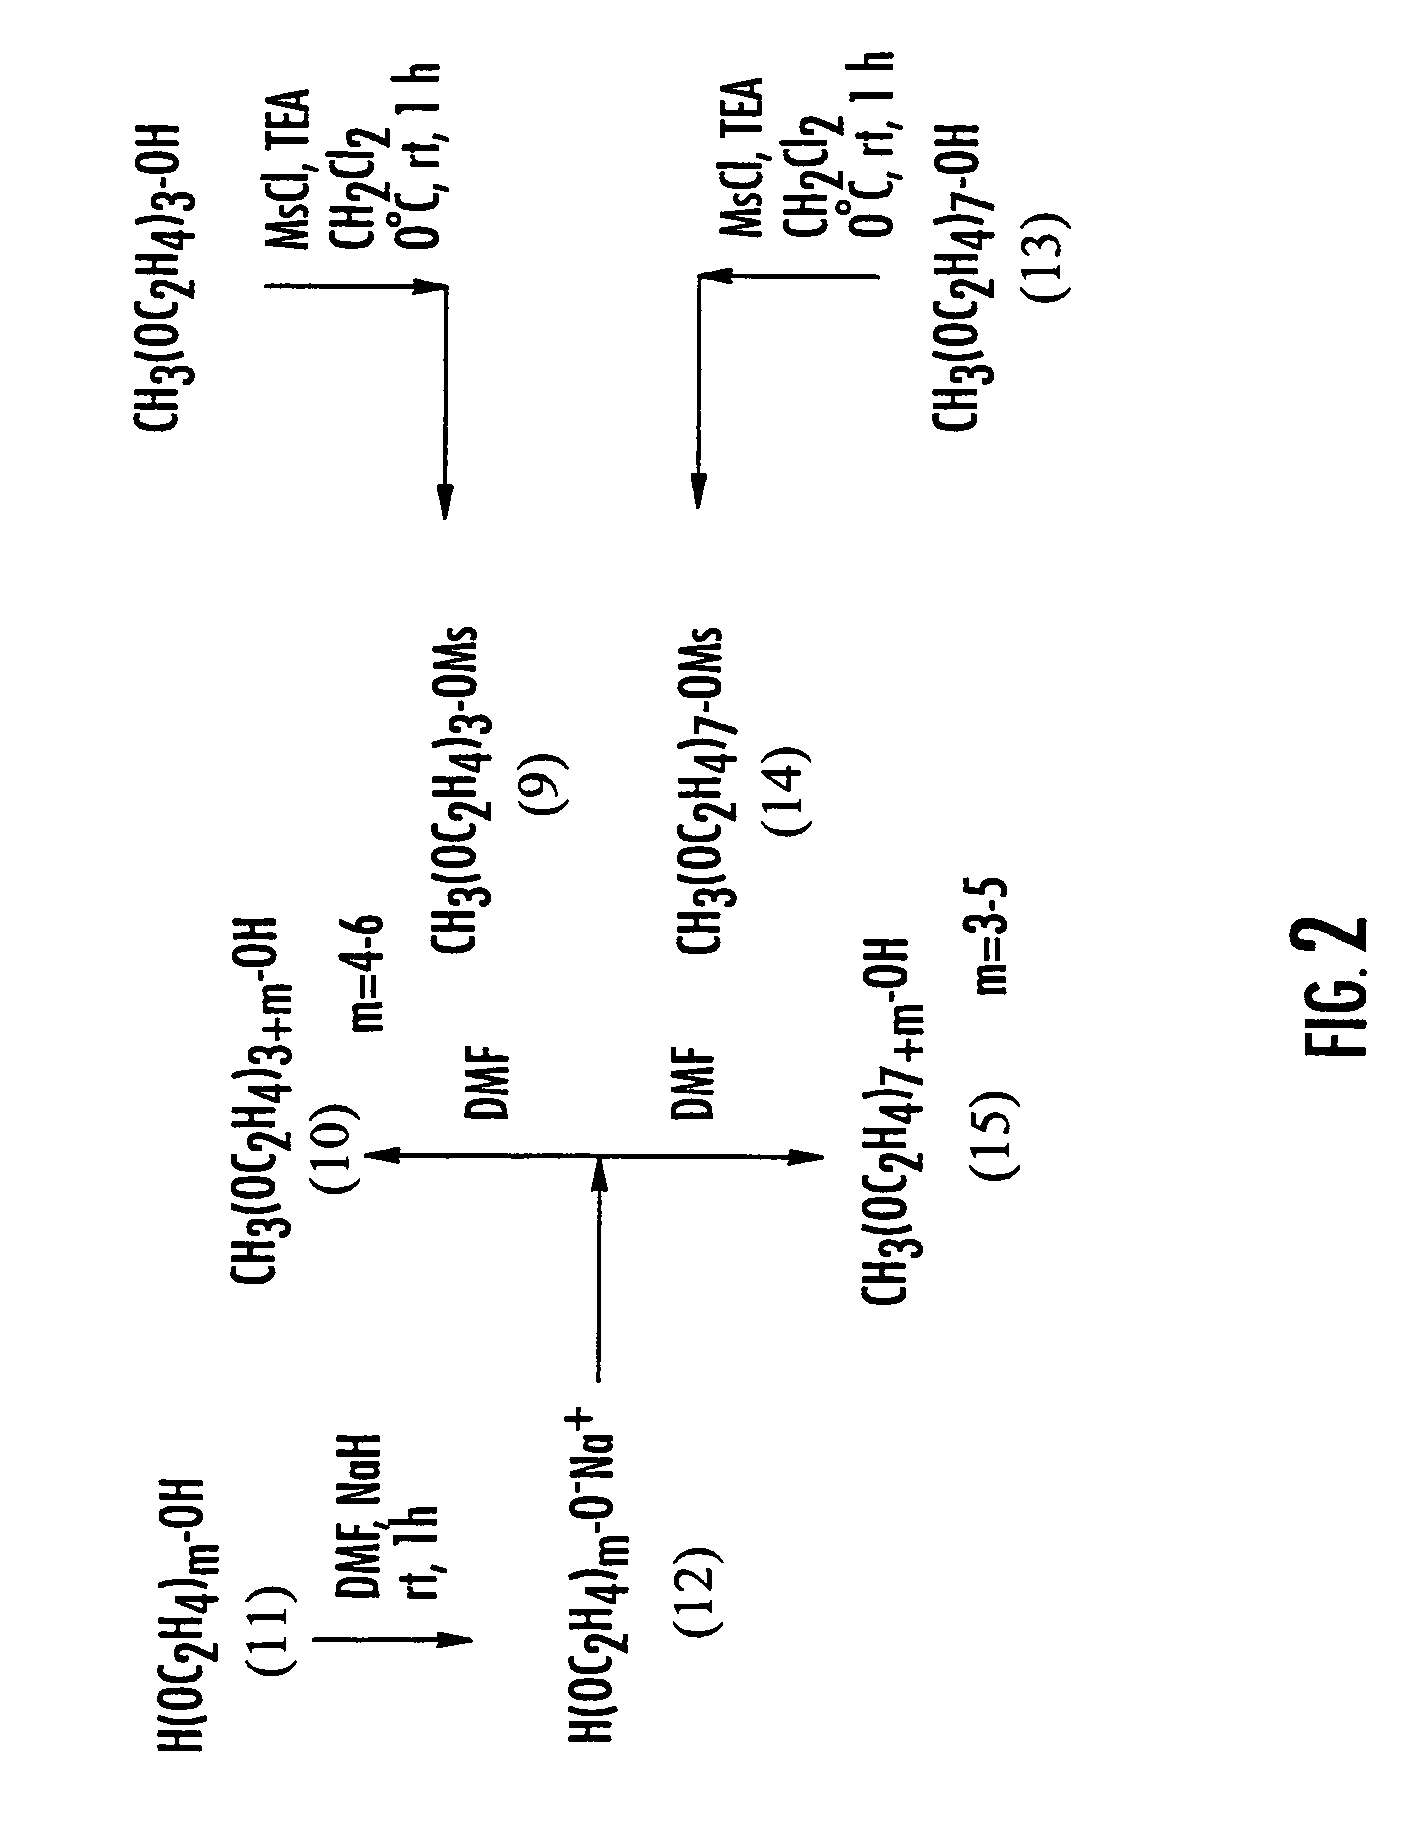 Mixtures of insulin drug-oligomer comprising polyalkylene glycol